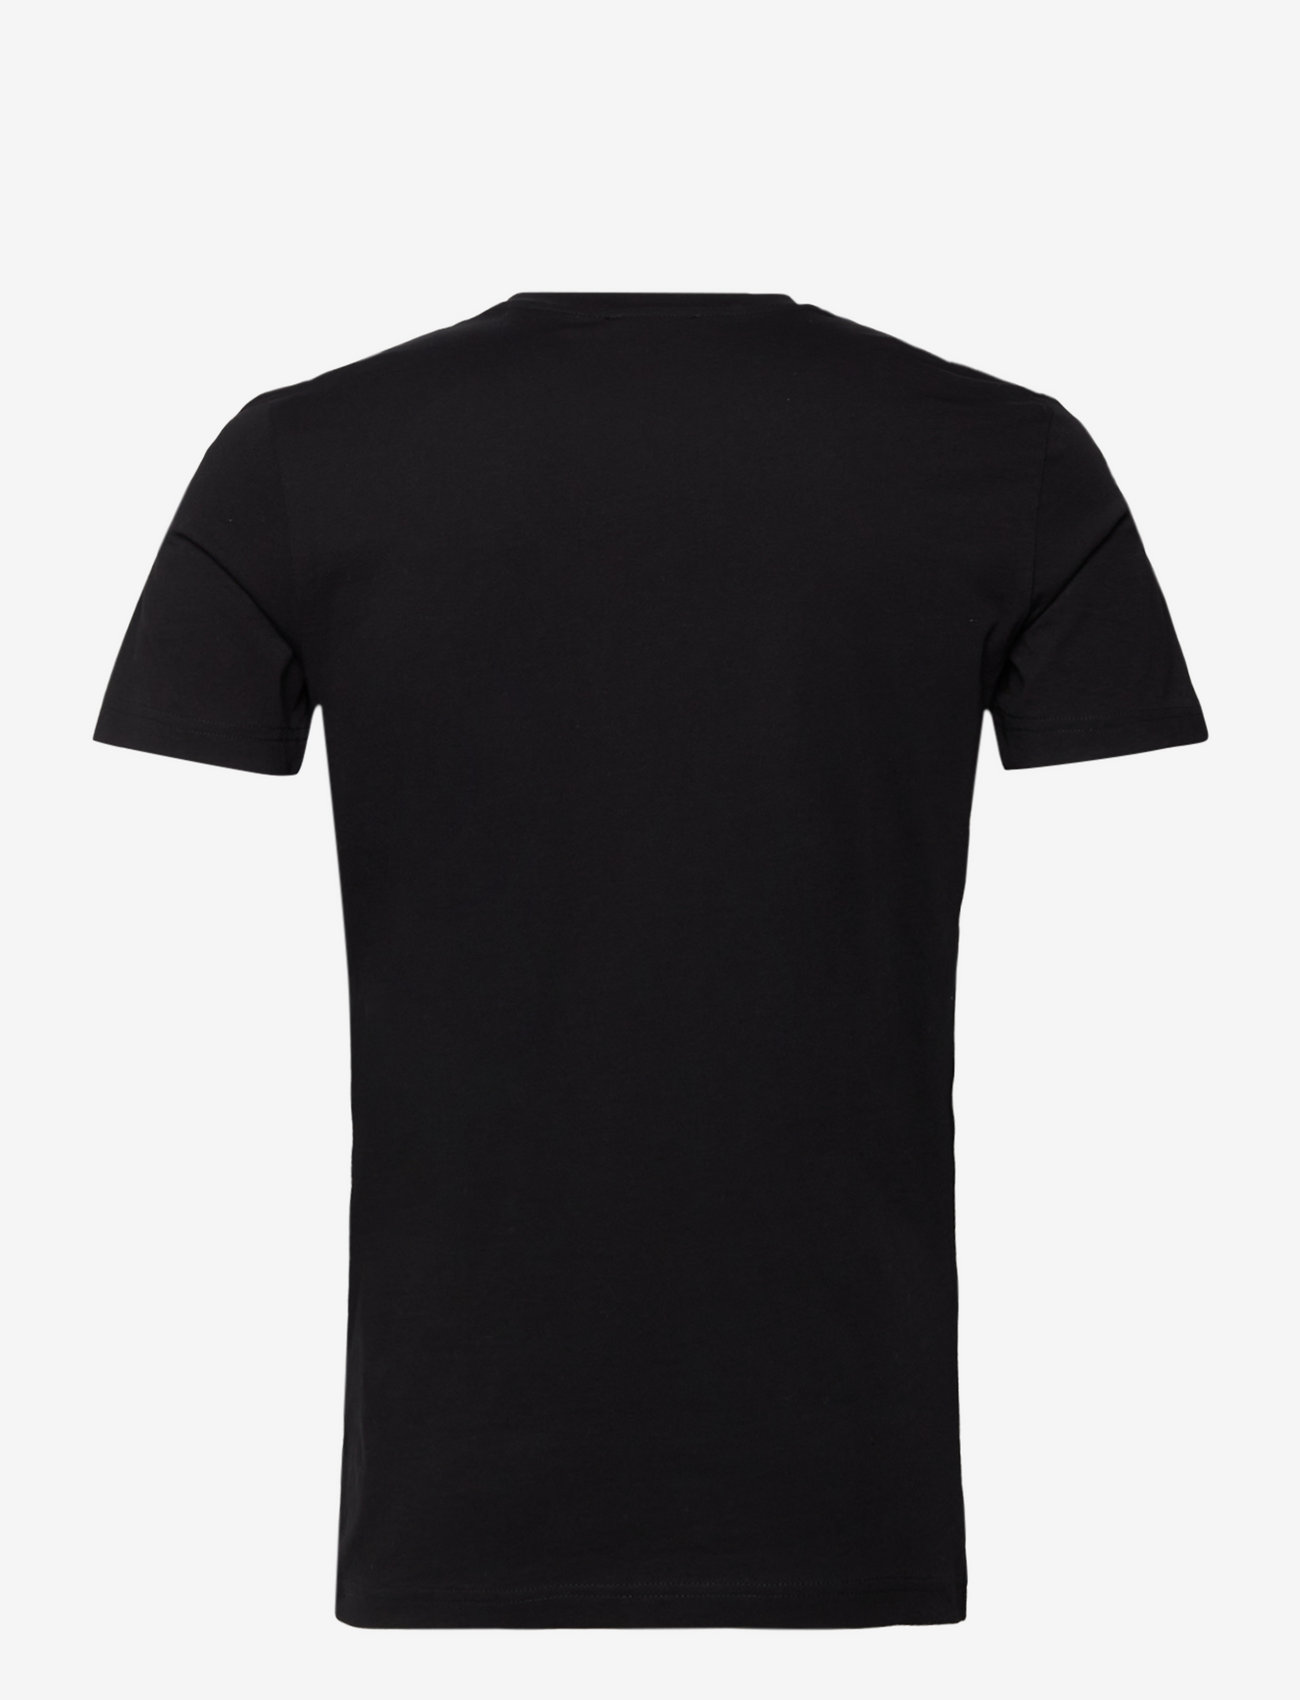 Diesel - T-DIEGOR-DIV T-SHIRT - short-sleeved t-shirts - deep/black - 1